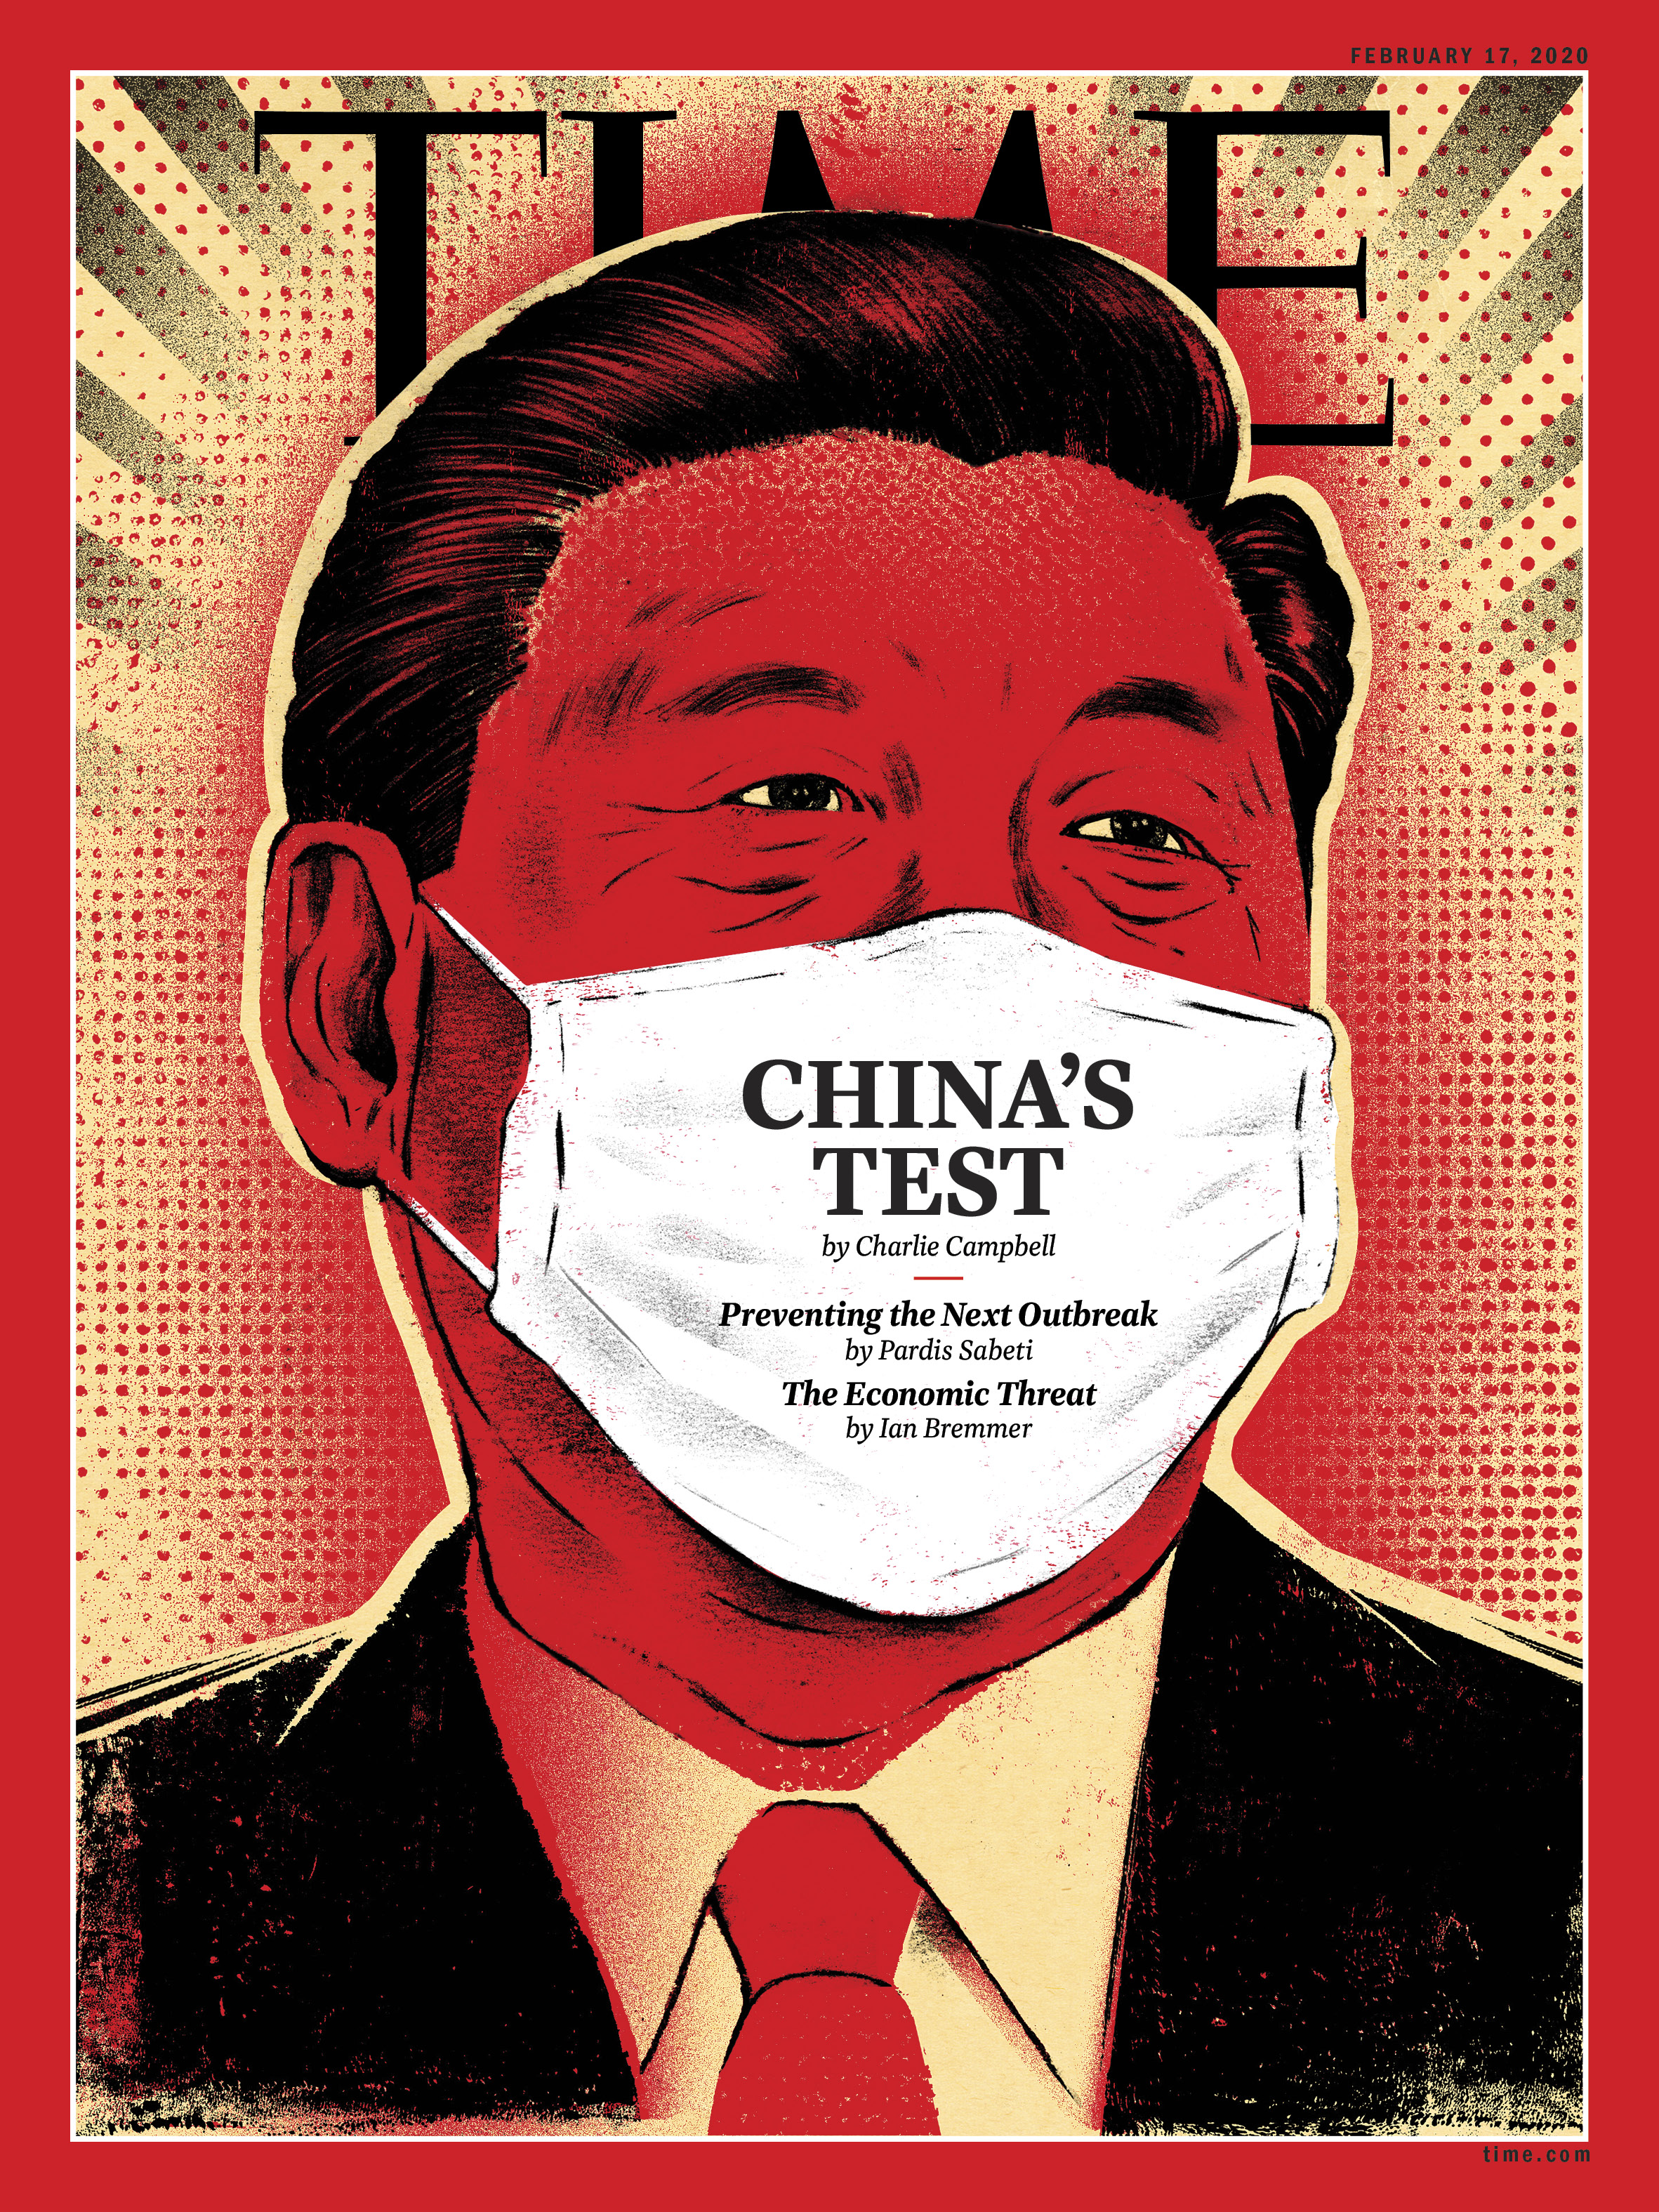 China Virus Xi Jinping Time Magazine Cover